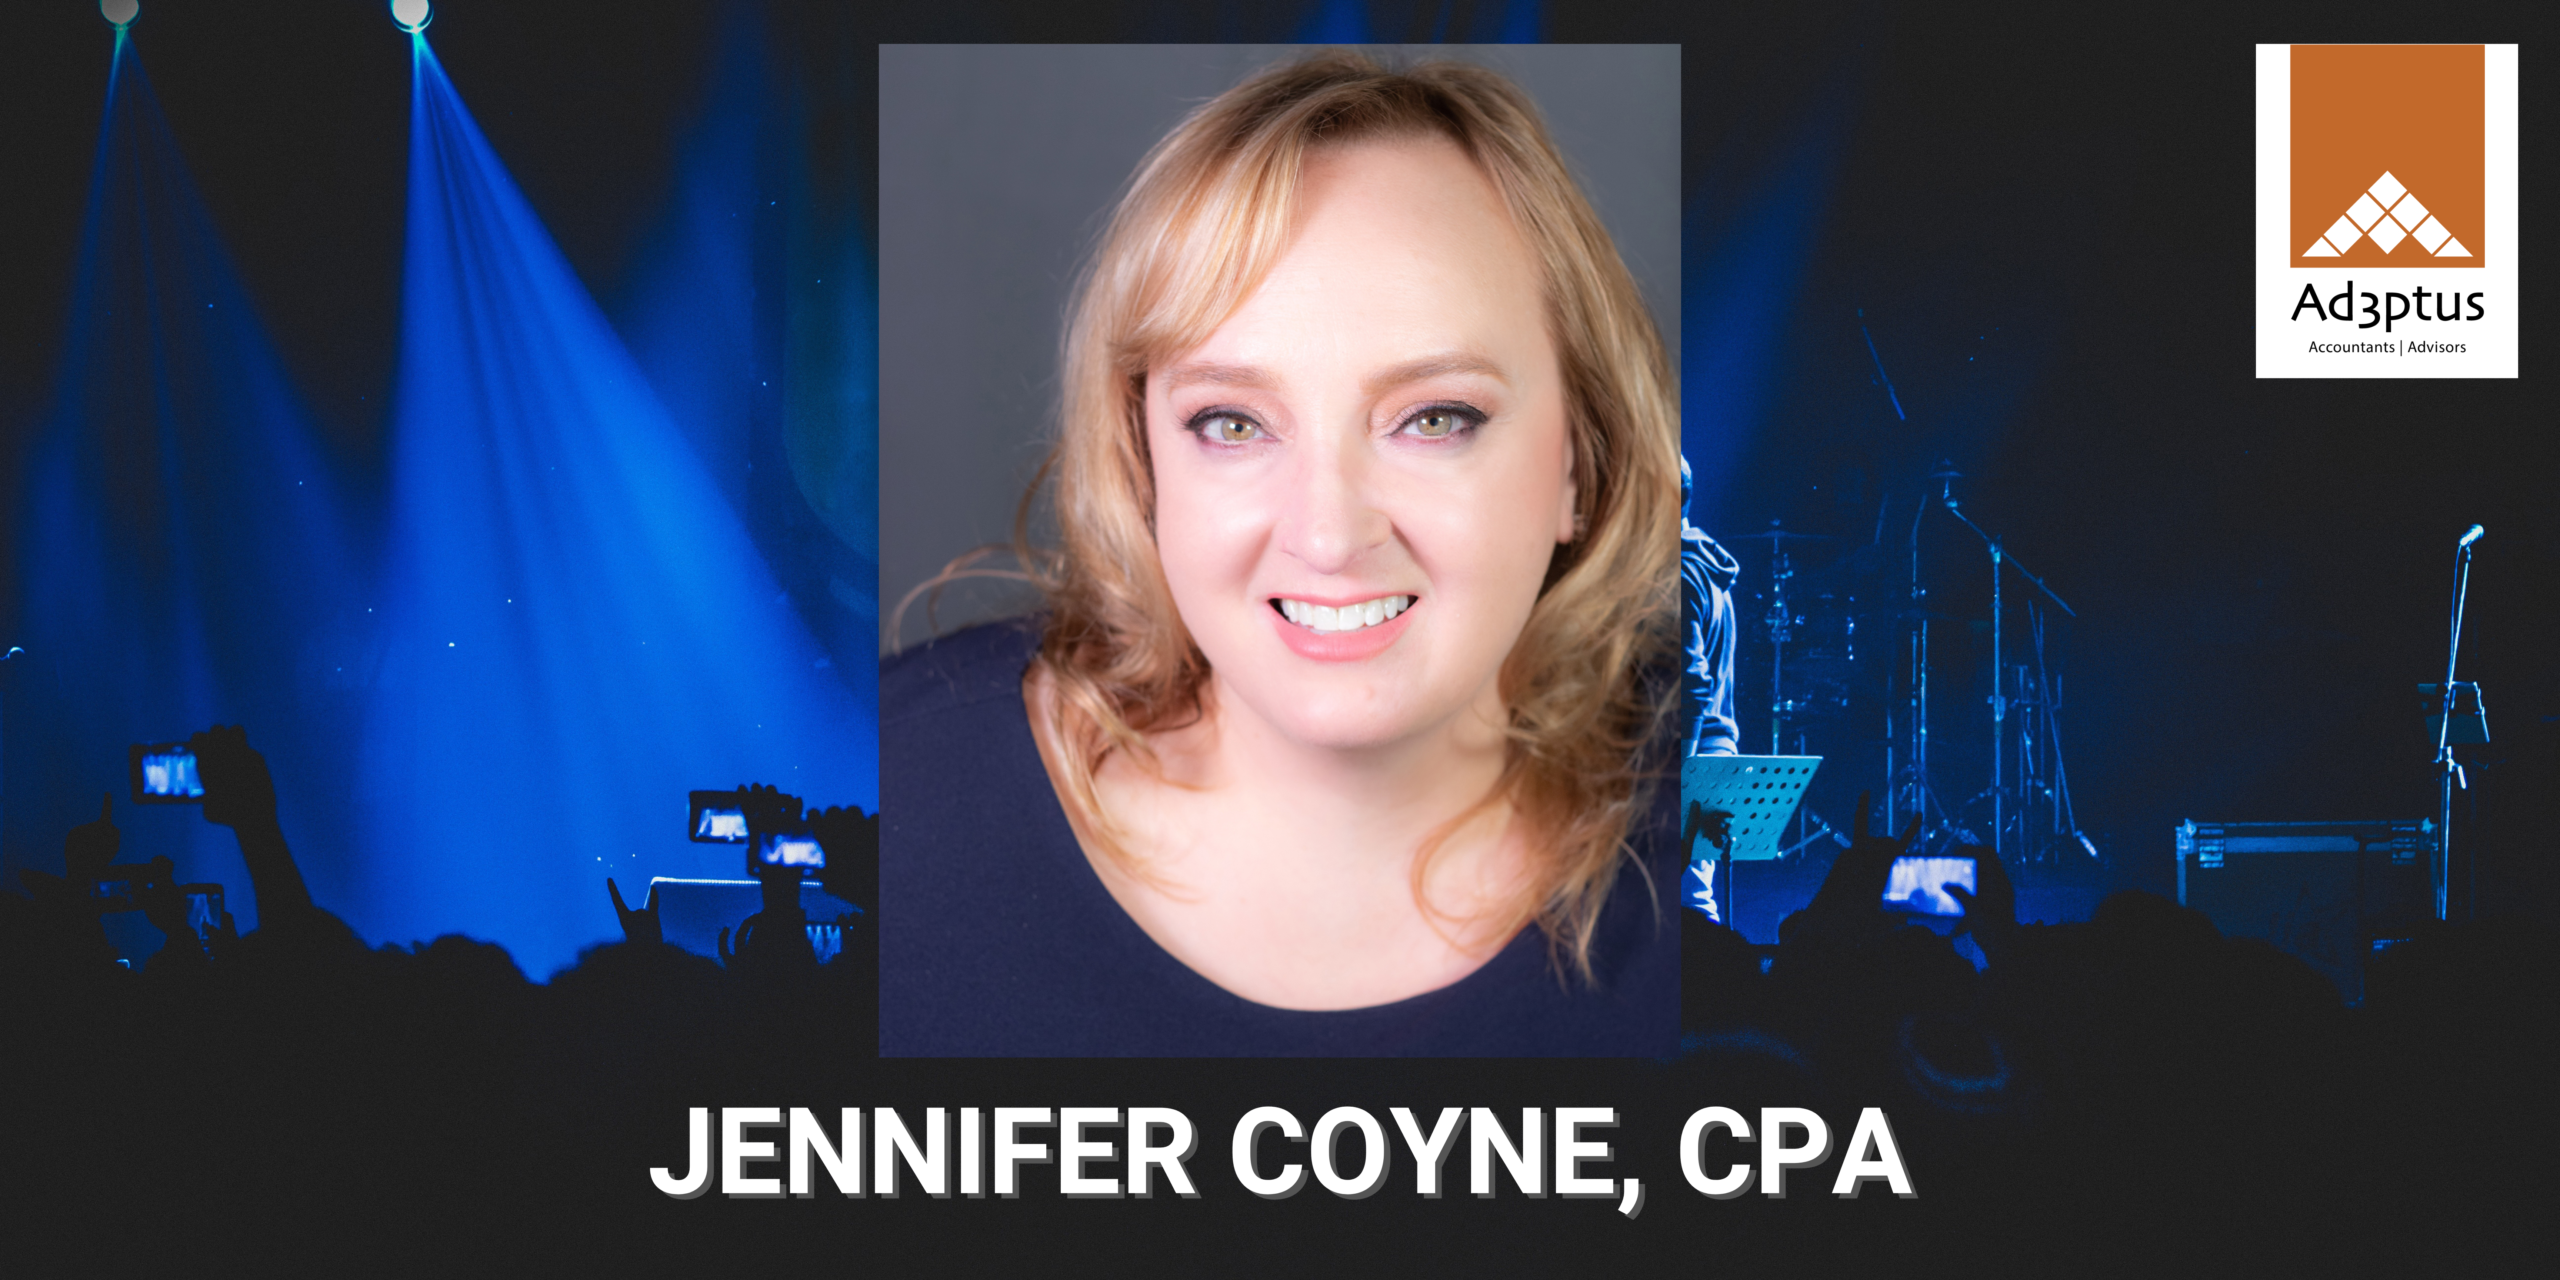 Jennifer Coyne, CPA Business Manager